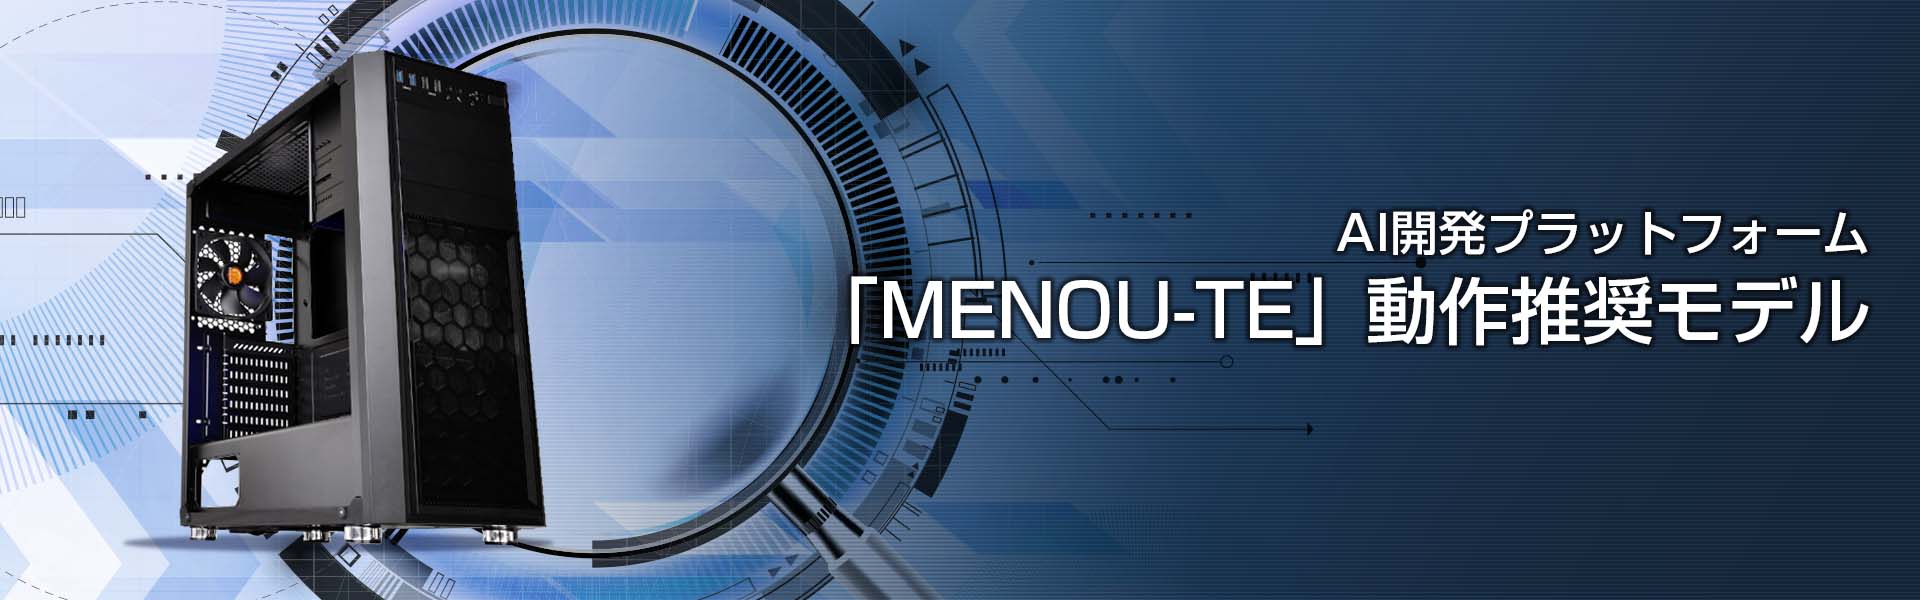 AI 開発プラットフォーム「MENOU-TE」